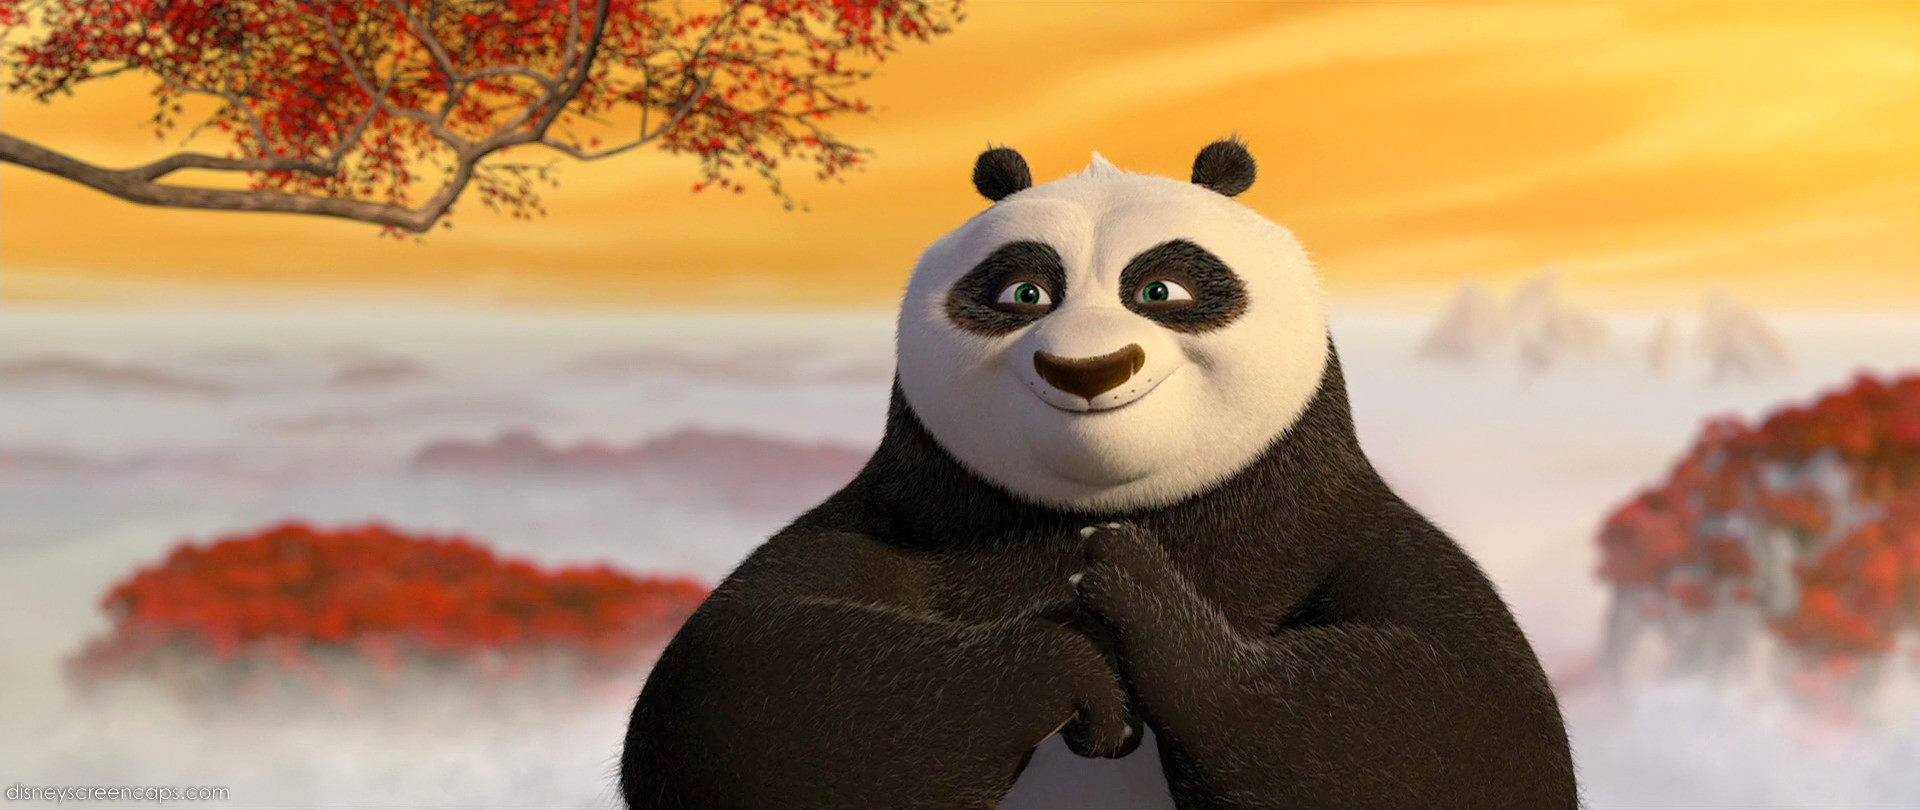 Kung Fu Panda 3 Movie HD Wallpapers | Kung Fu Panda 3 HD 